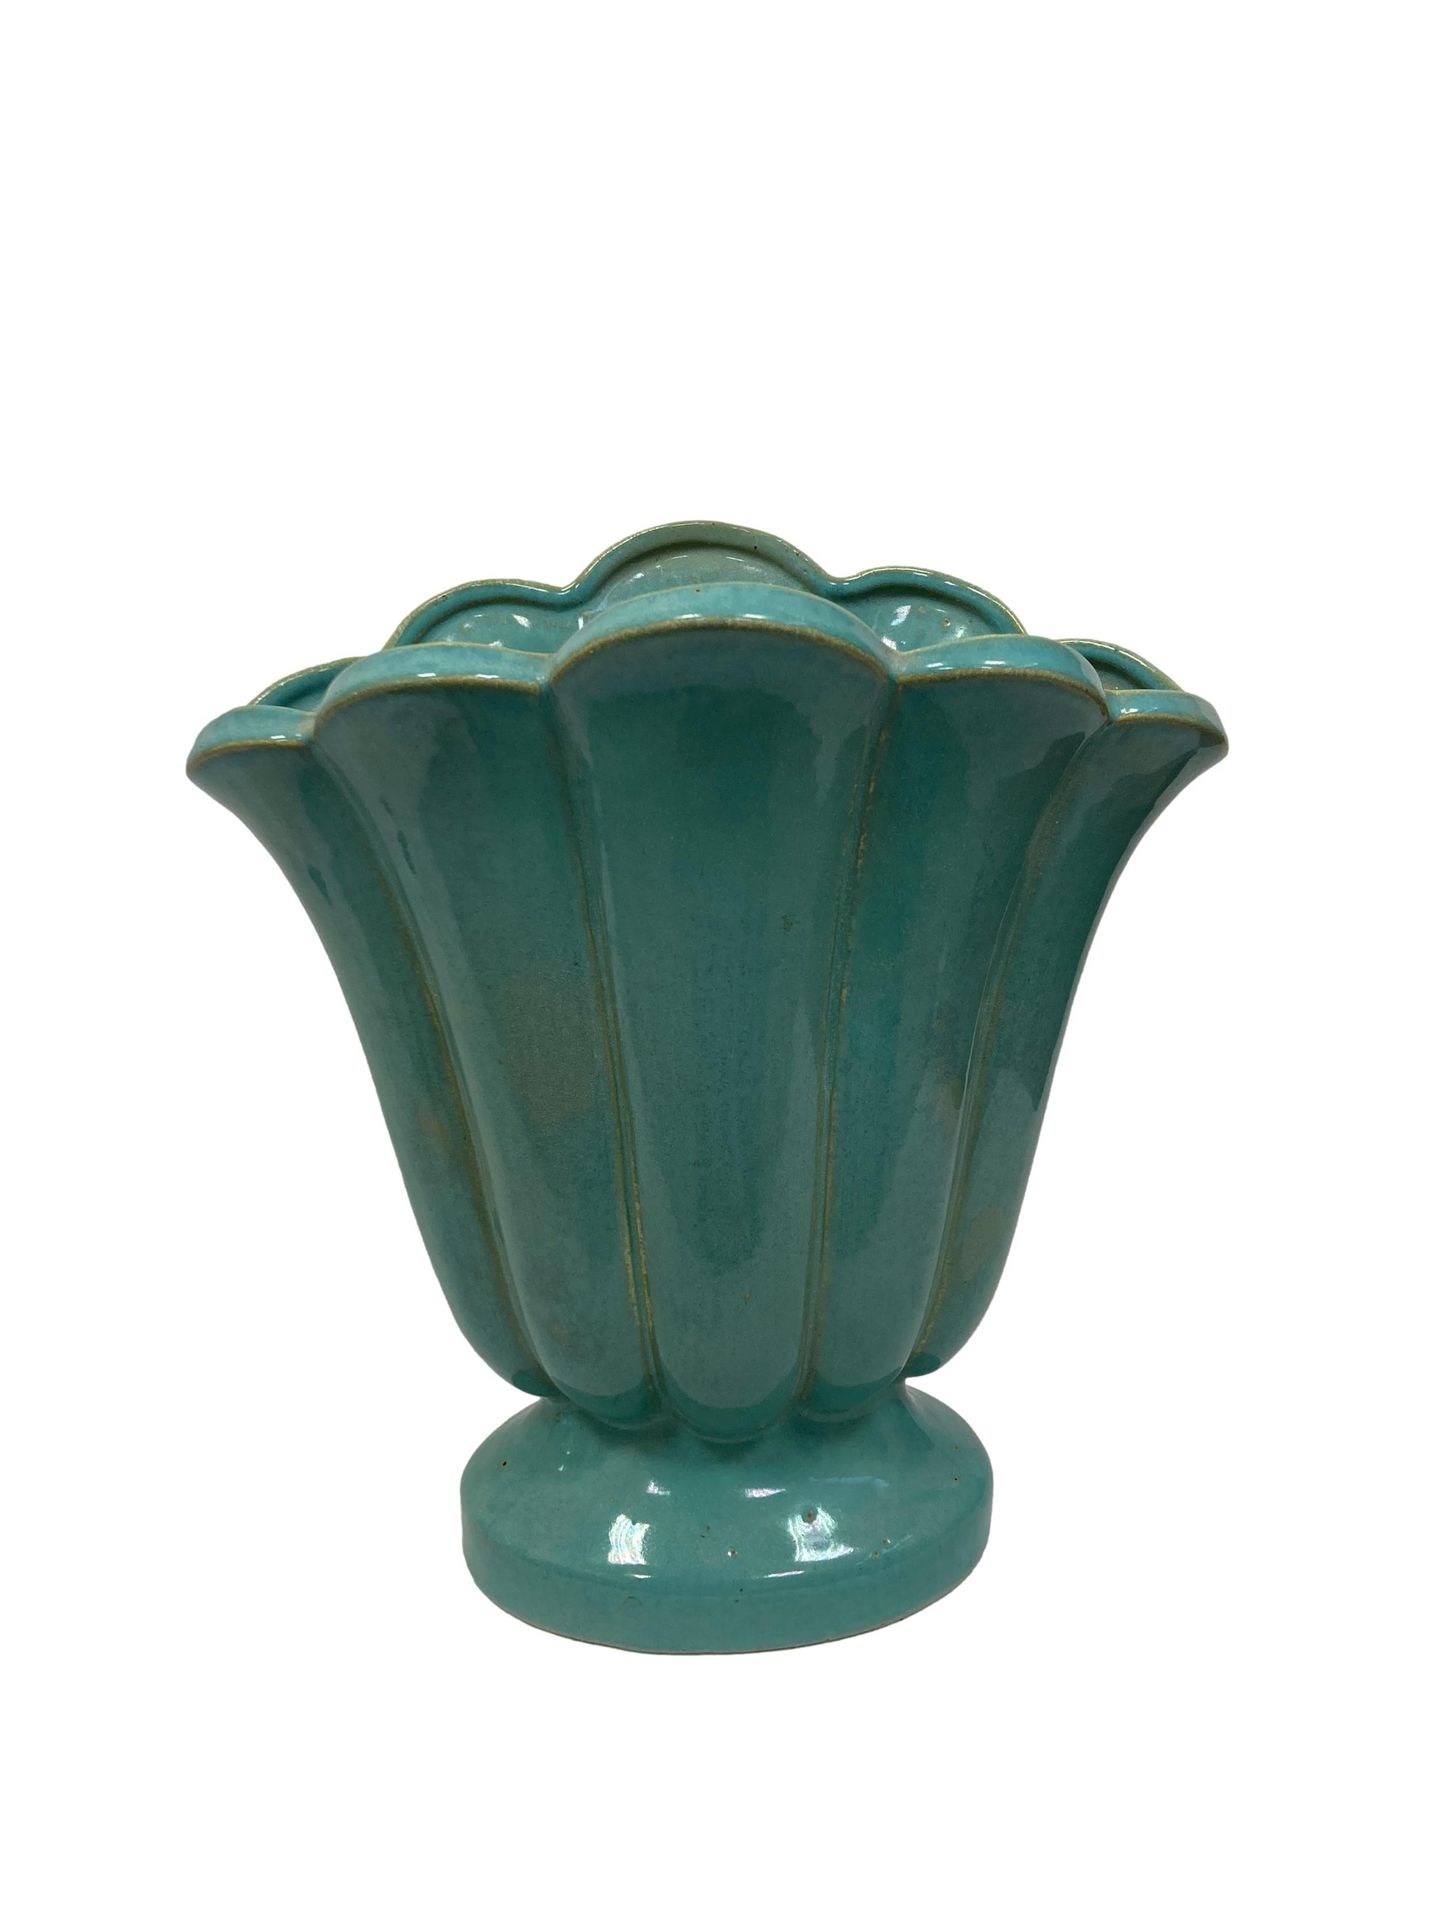 Null 皇家海格

绿色釉面陶瓷花瓶，侧面扁平，有大块的伽蓝装饰

H.31厘米